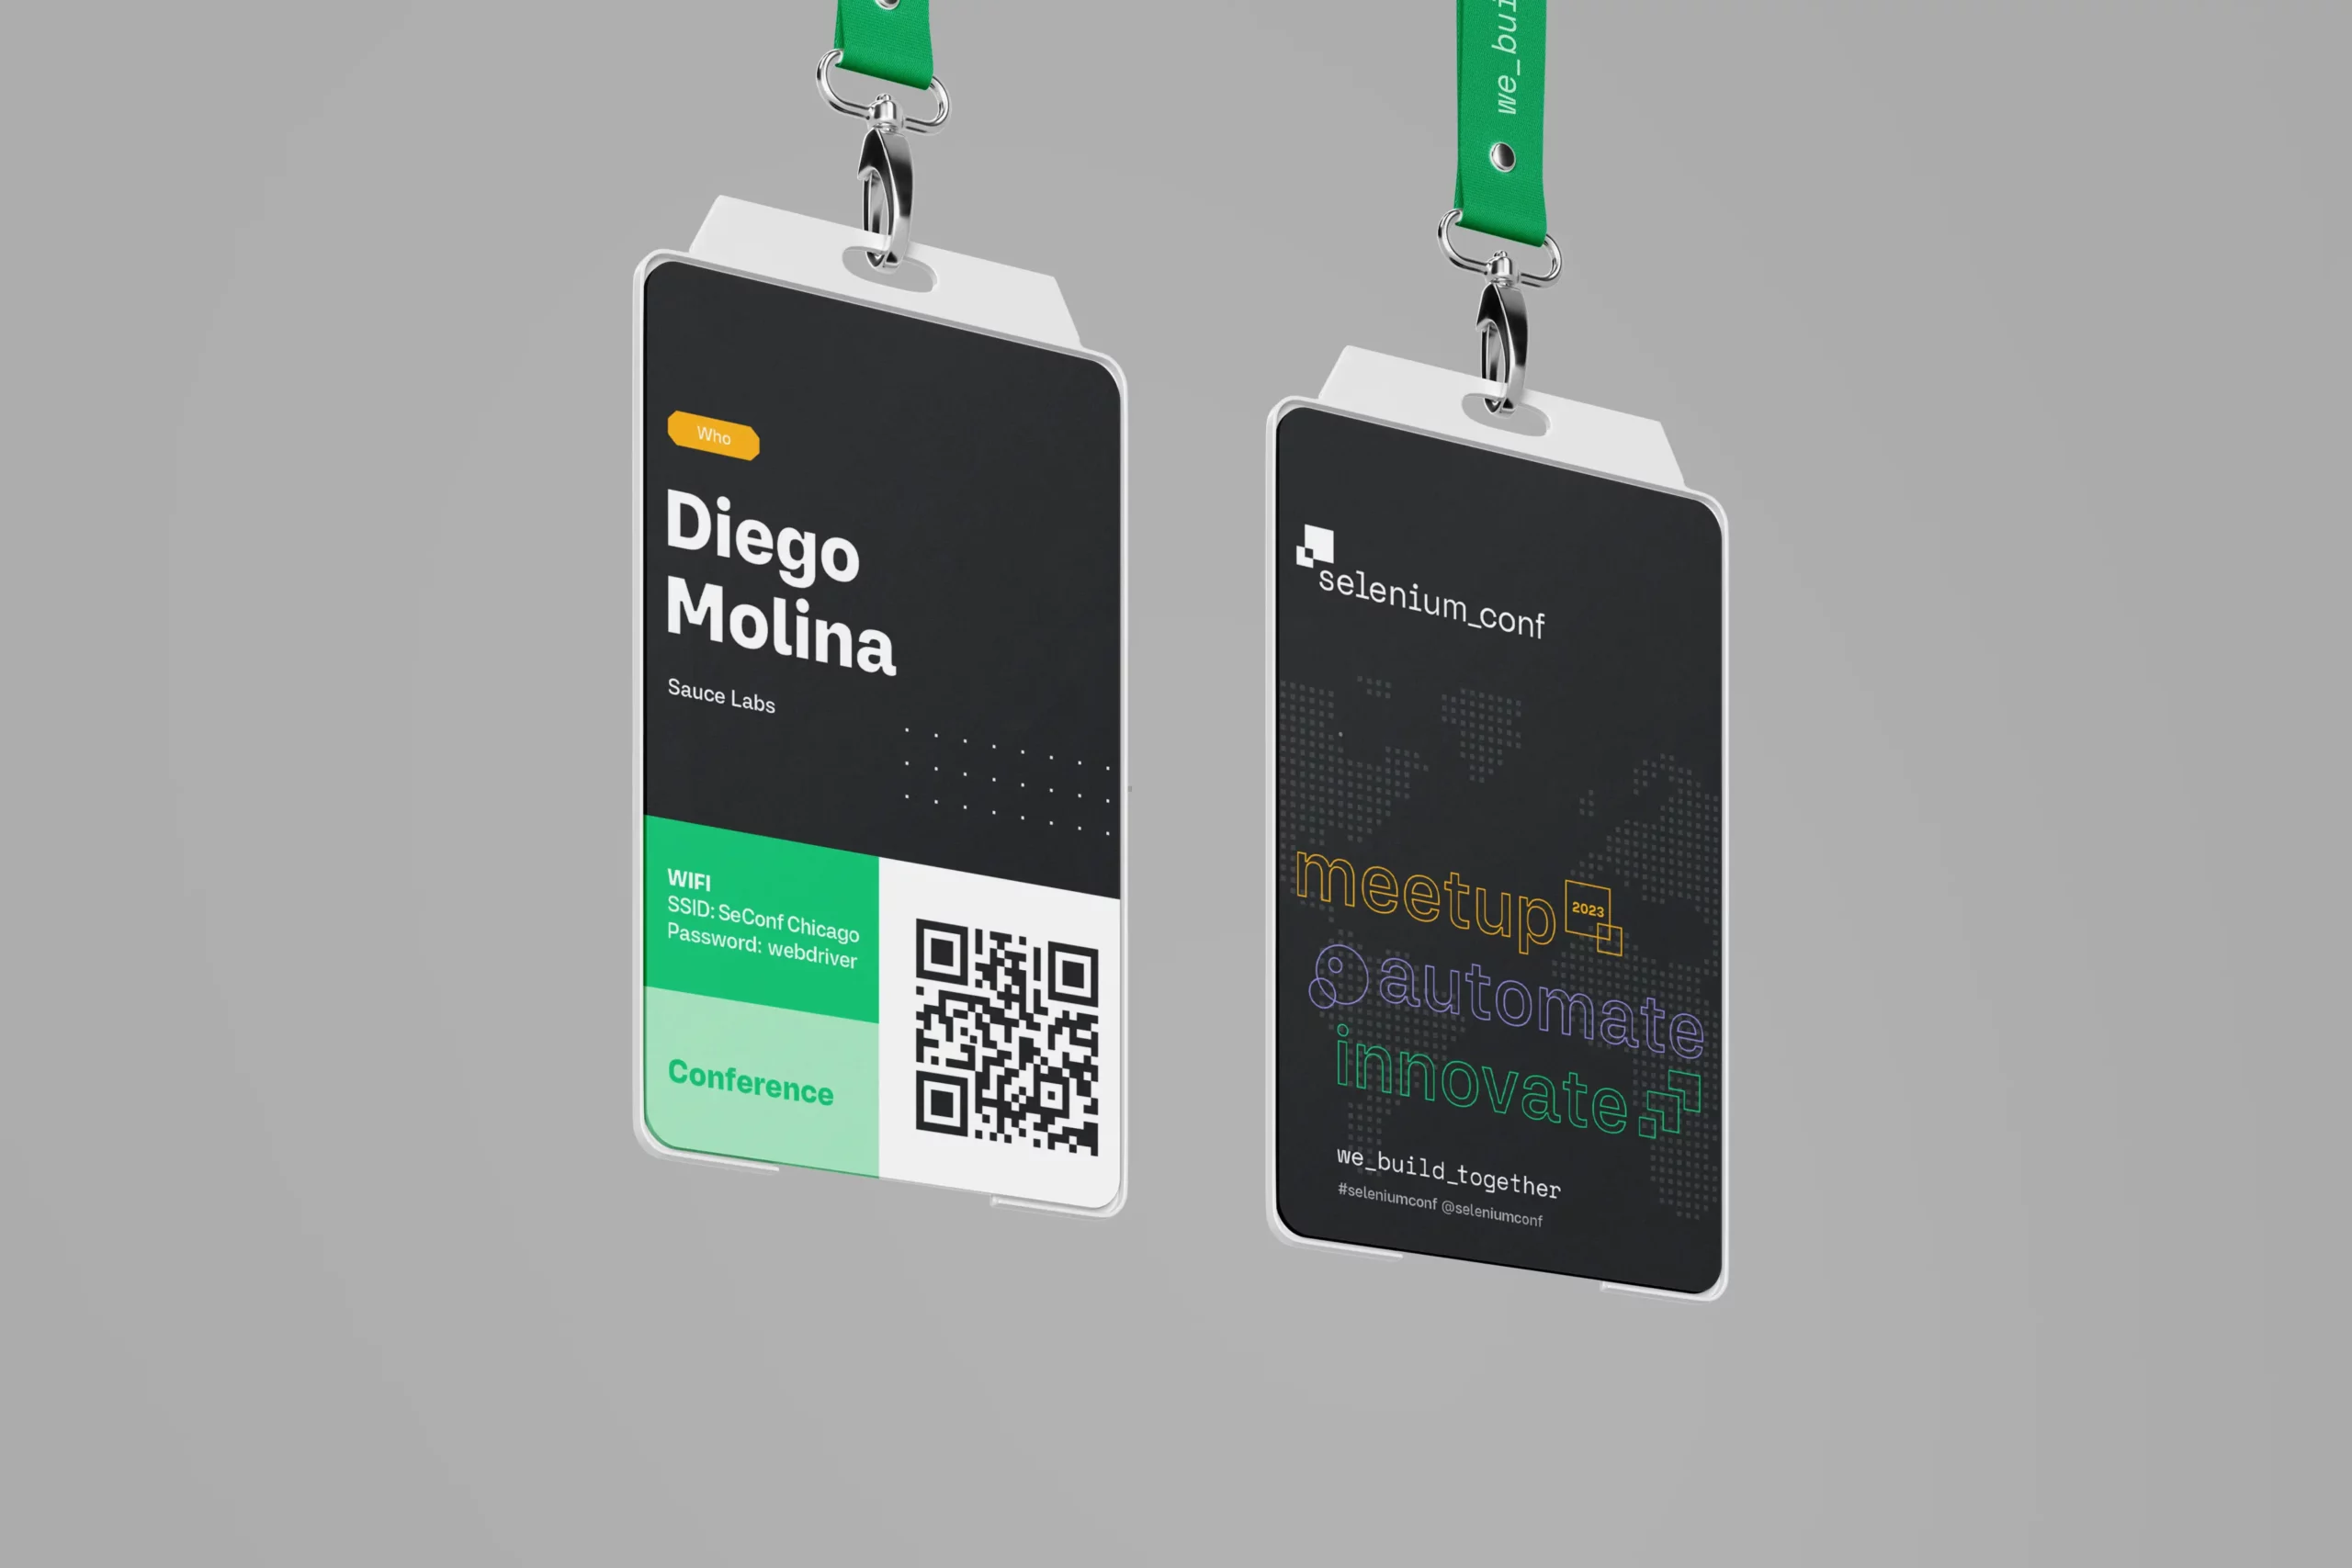 Selenium Conference badges